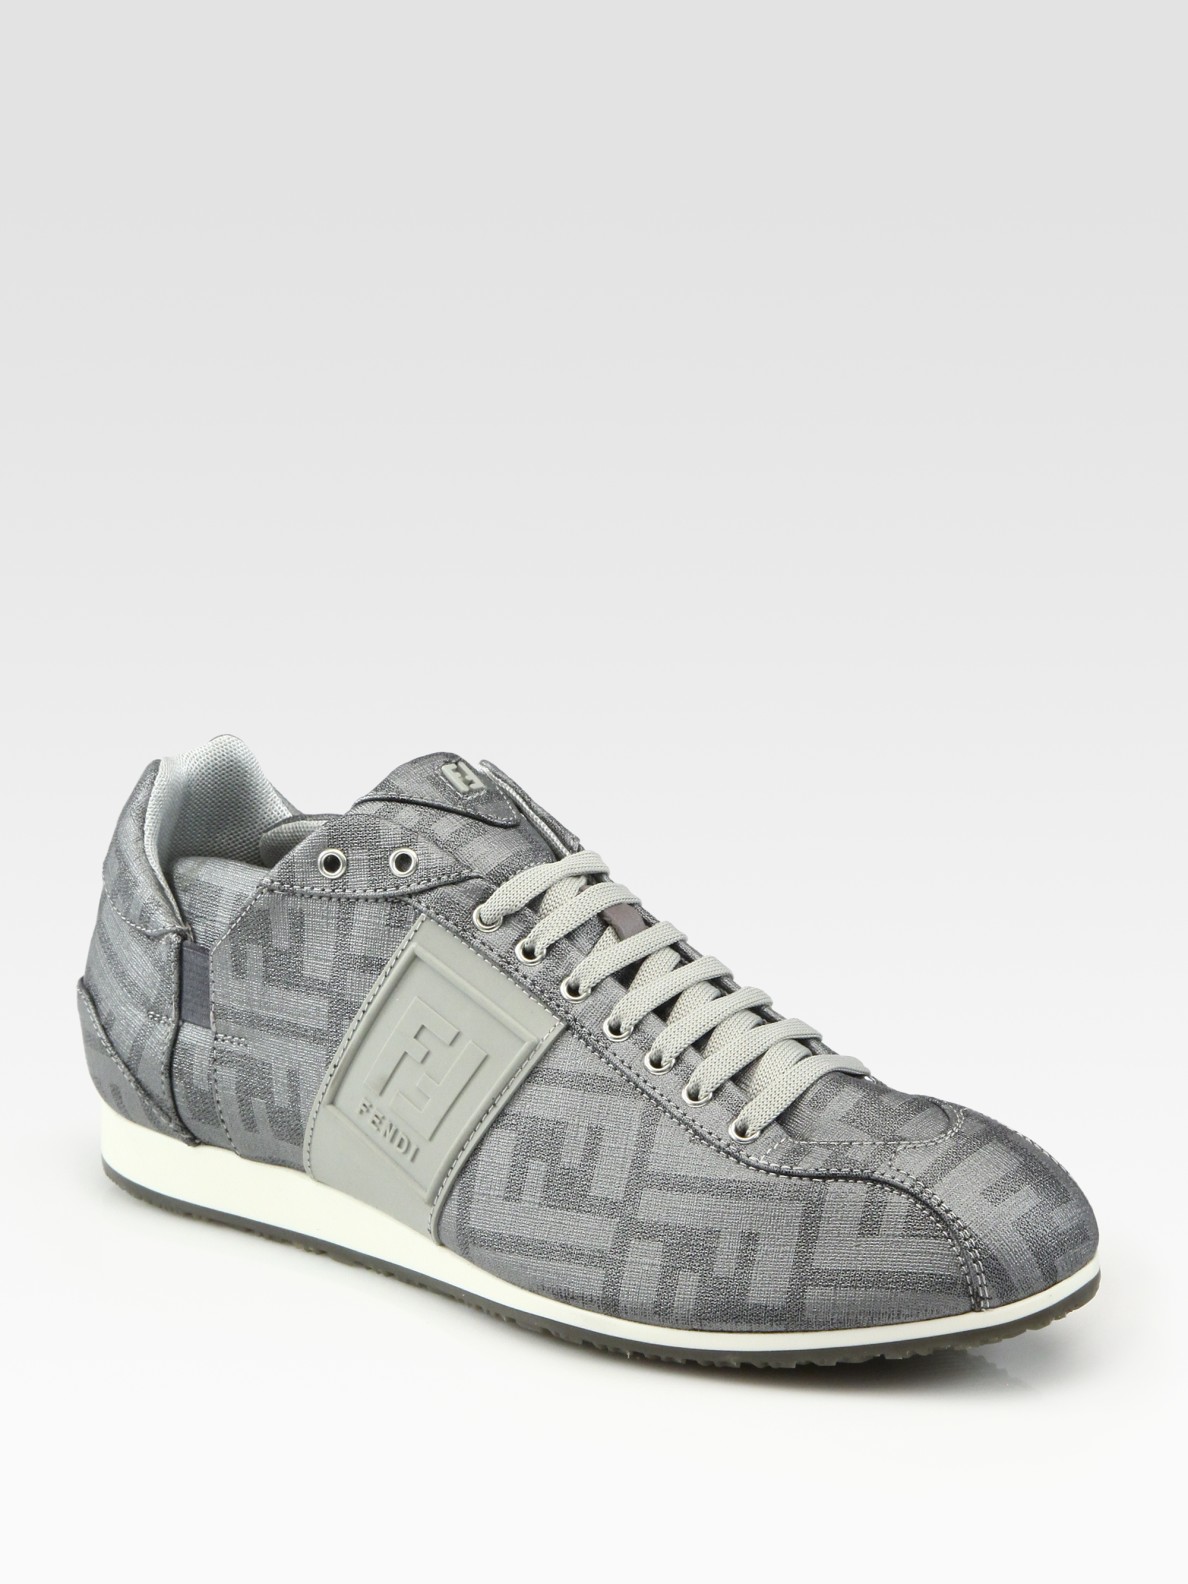 Fendi Zucca Canvas Sneakers in Gray for Men | Lyst